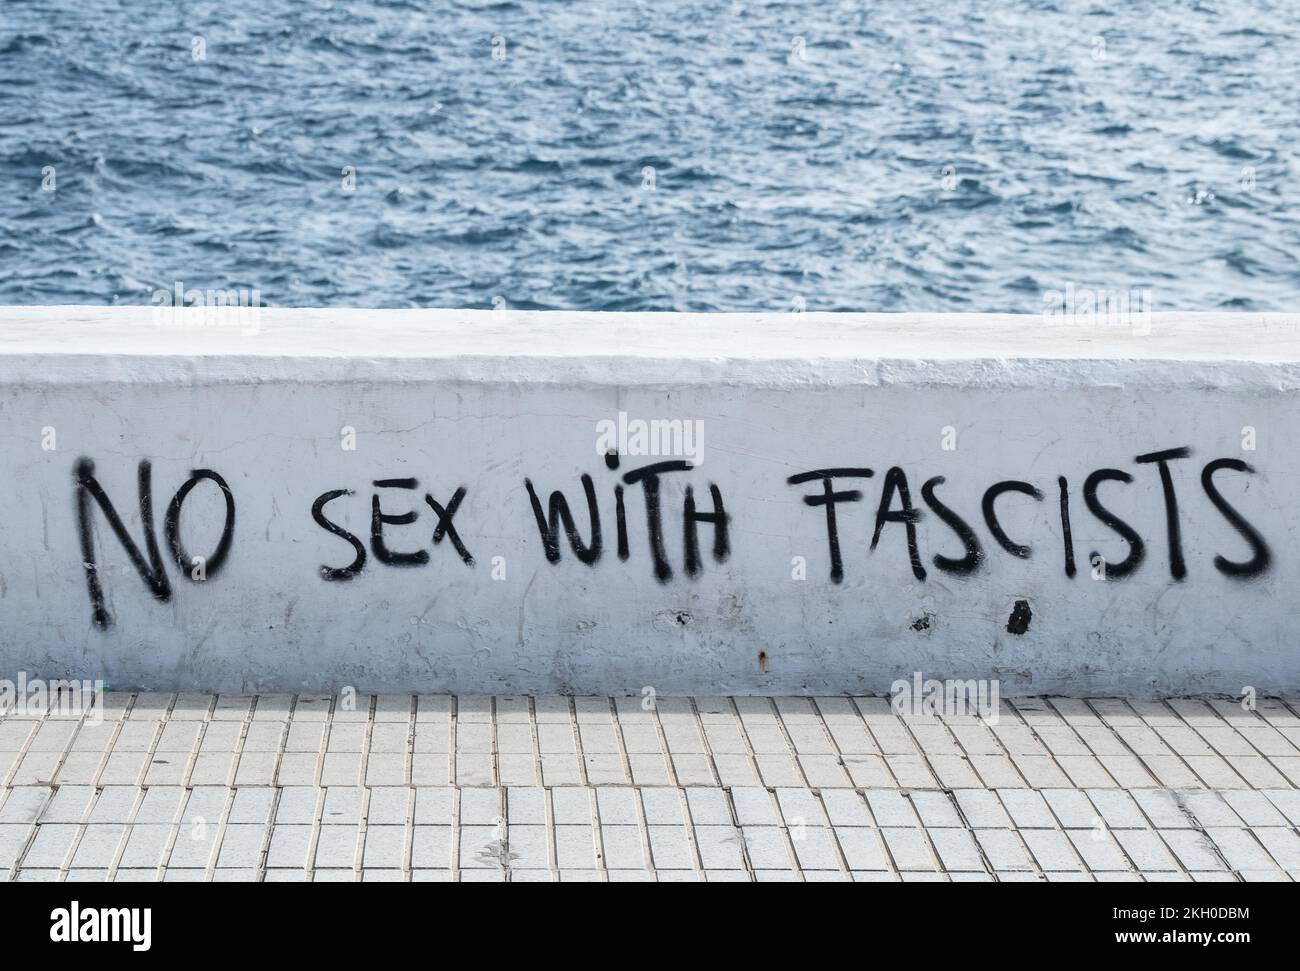 No sex with fascists graffiti on sea wall. Stock Photo